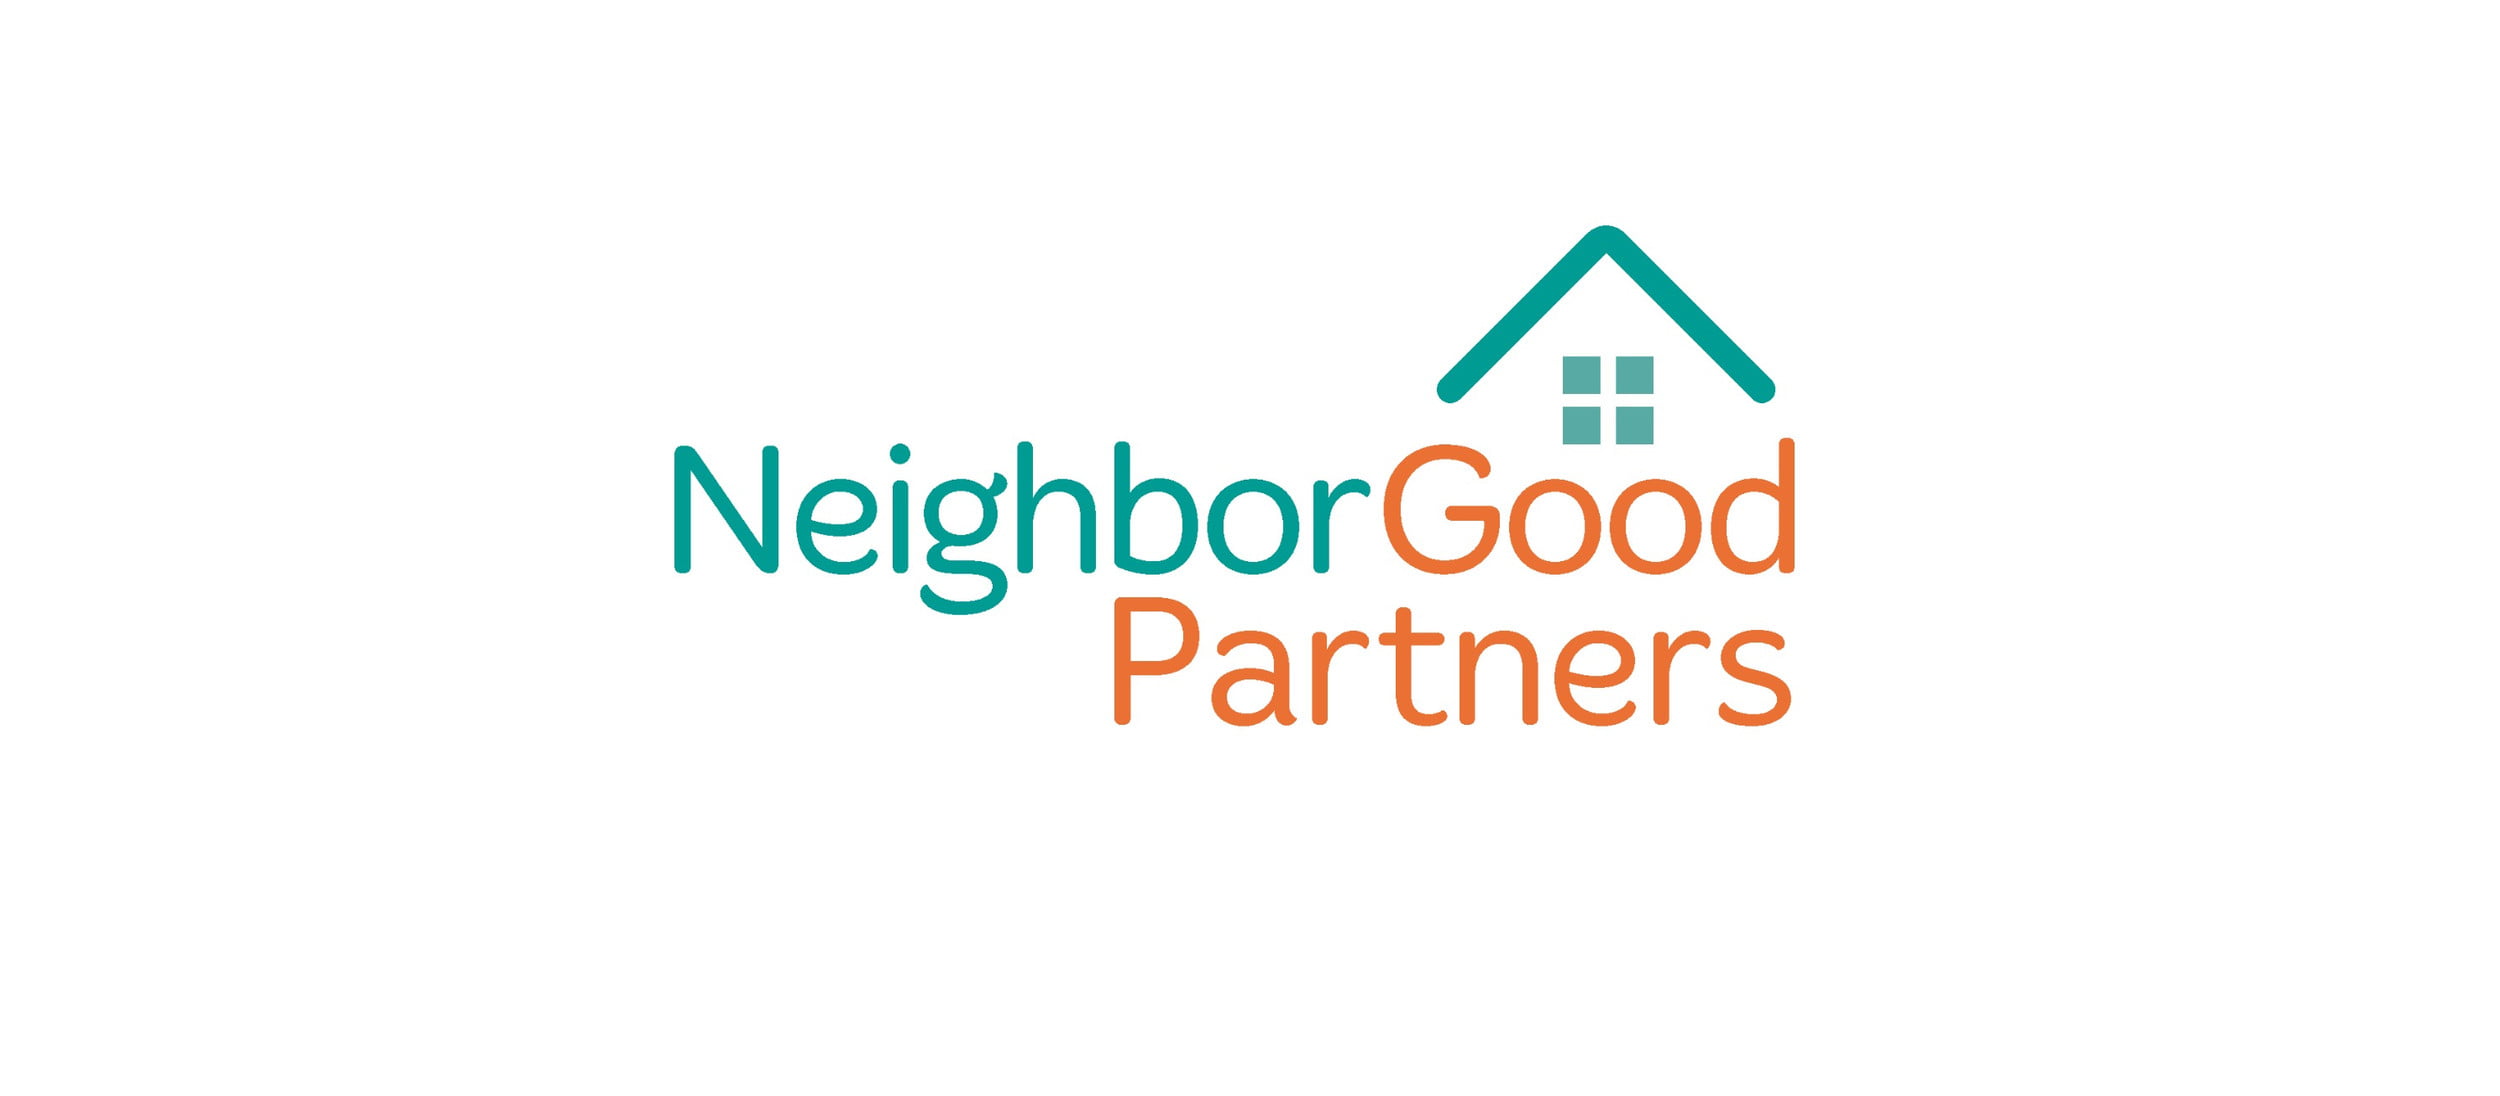 Neightbor Good Partners logo